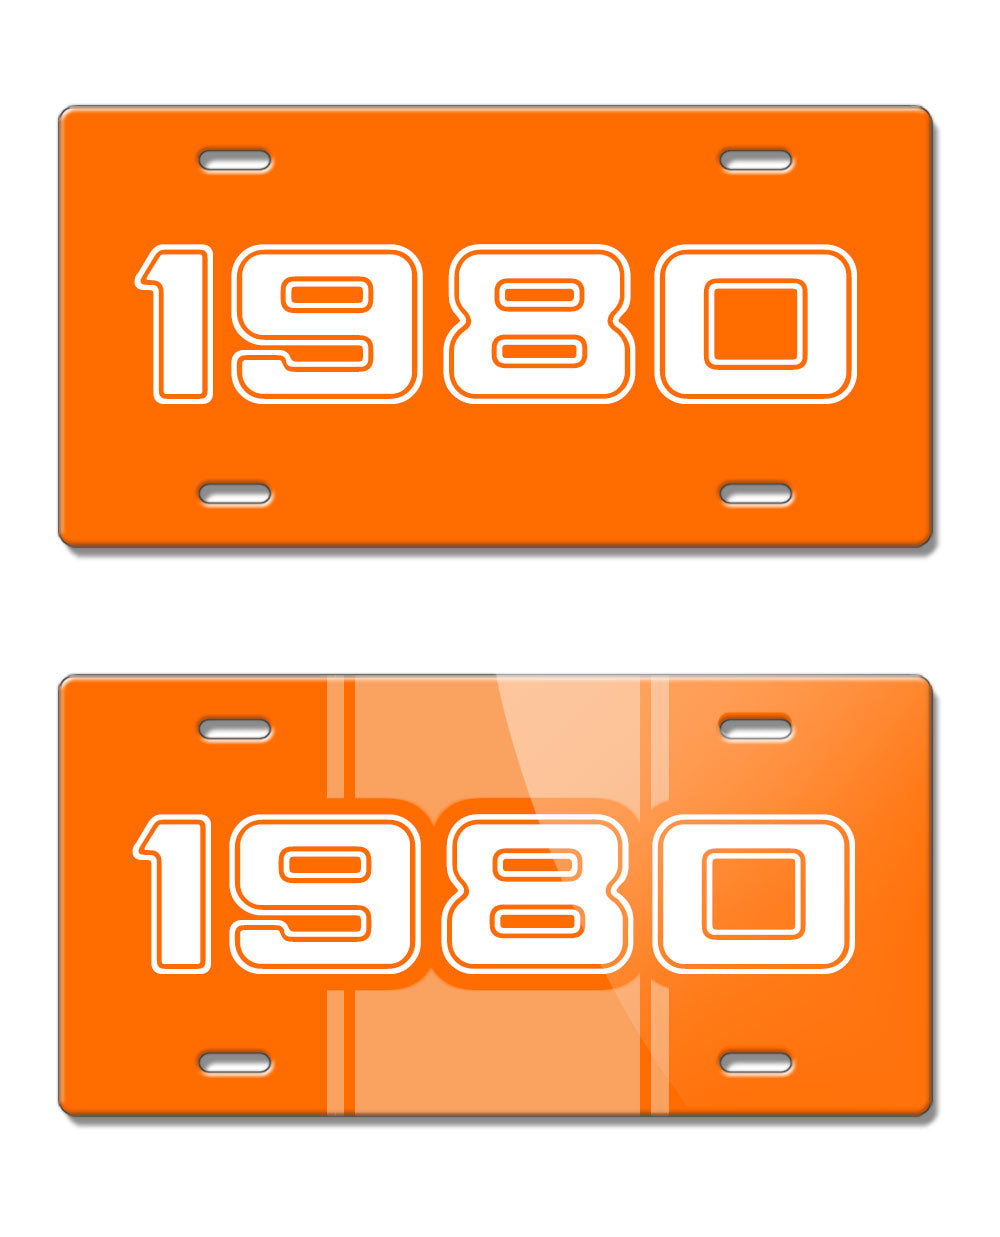 1980 Customizable - License Plate